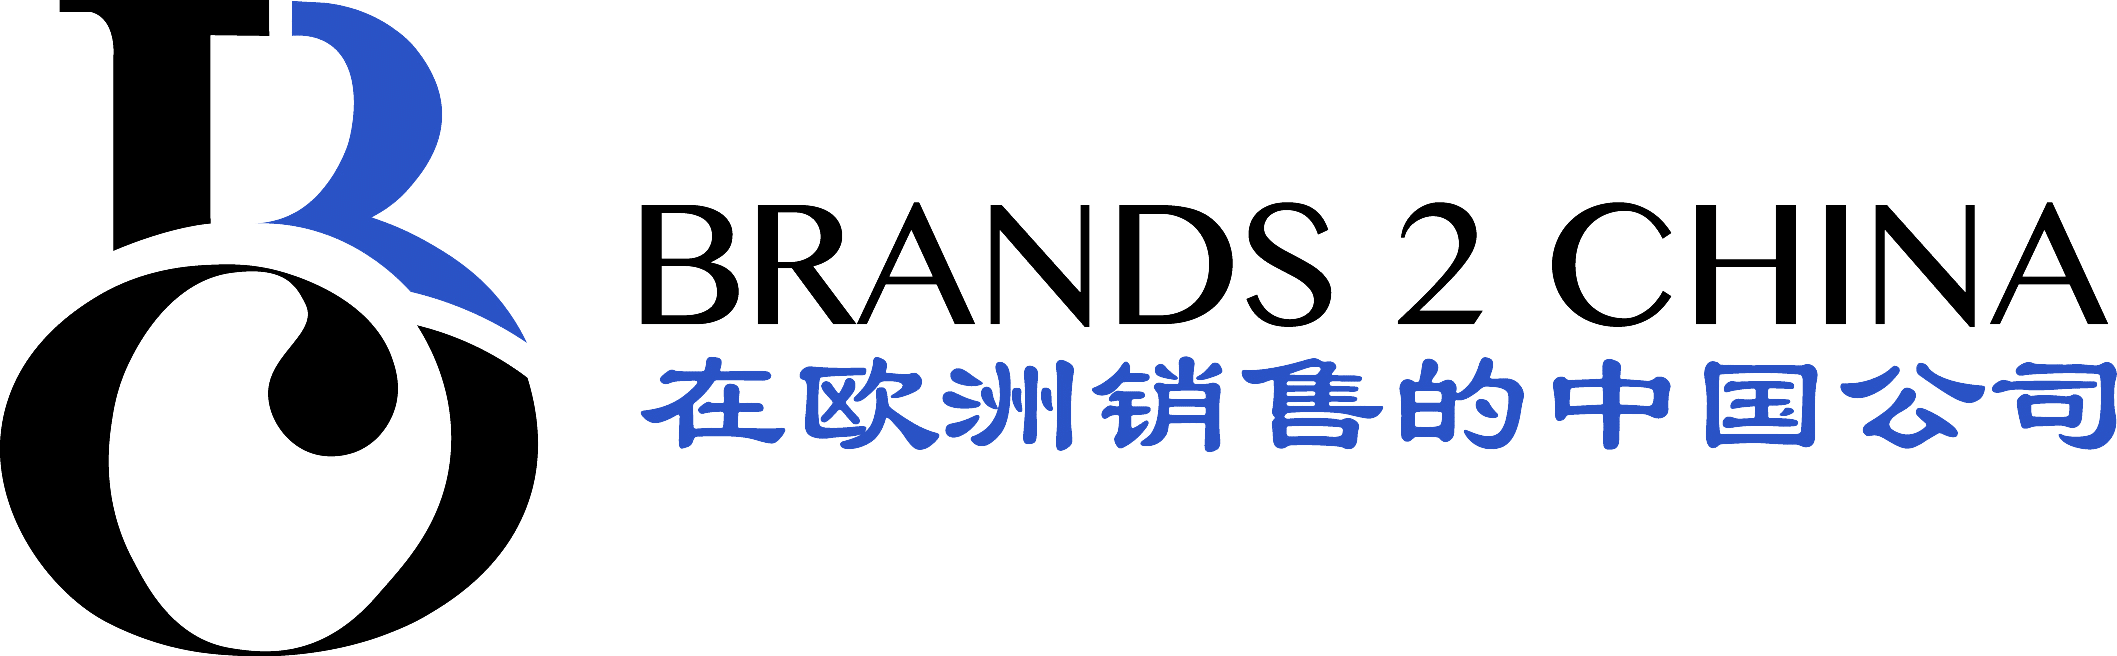 Brands 2 China logo